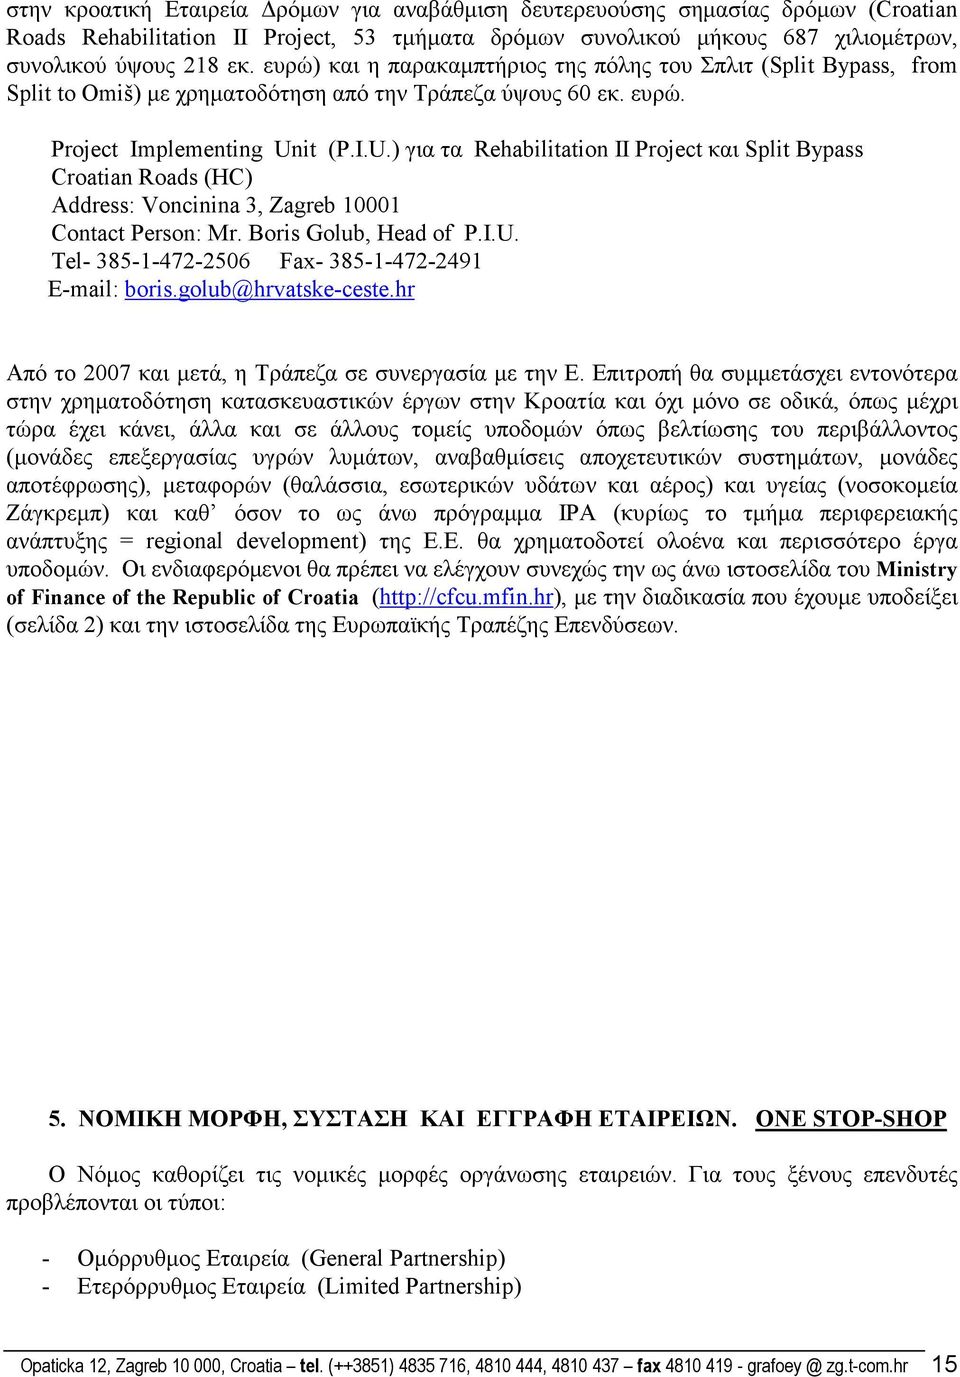 it (P.I.U.) για τα Rehabilitation II Project και Split Bypass Croatian Roads (HC) Address: Voncinina 3, Zagreb 10001 Contact Person: Mr. Boris Golub, Head of P.I.U. Tel- 385-1-472-2506 Fax- 385-1-472-2491 E-mail: boris.